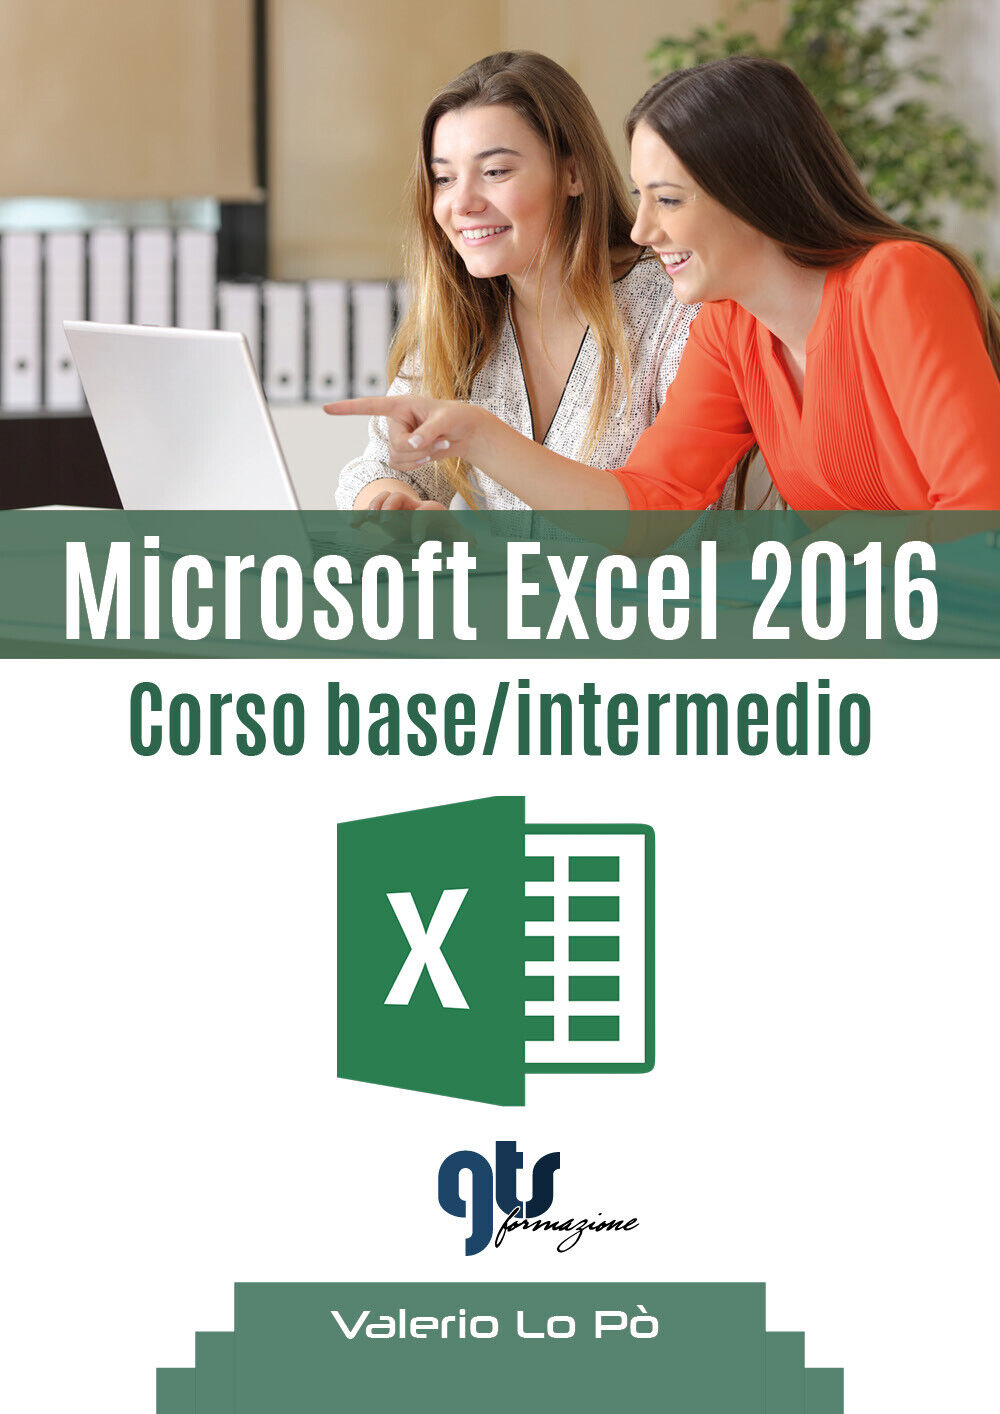 Microsoft Excel 2016 - Corso base/intermedio,Valerio Lo P?,  2019,  Youcanprint